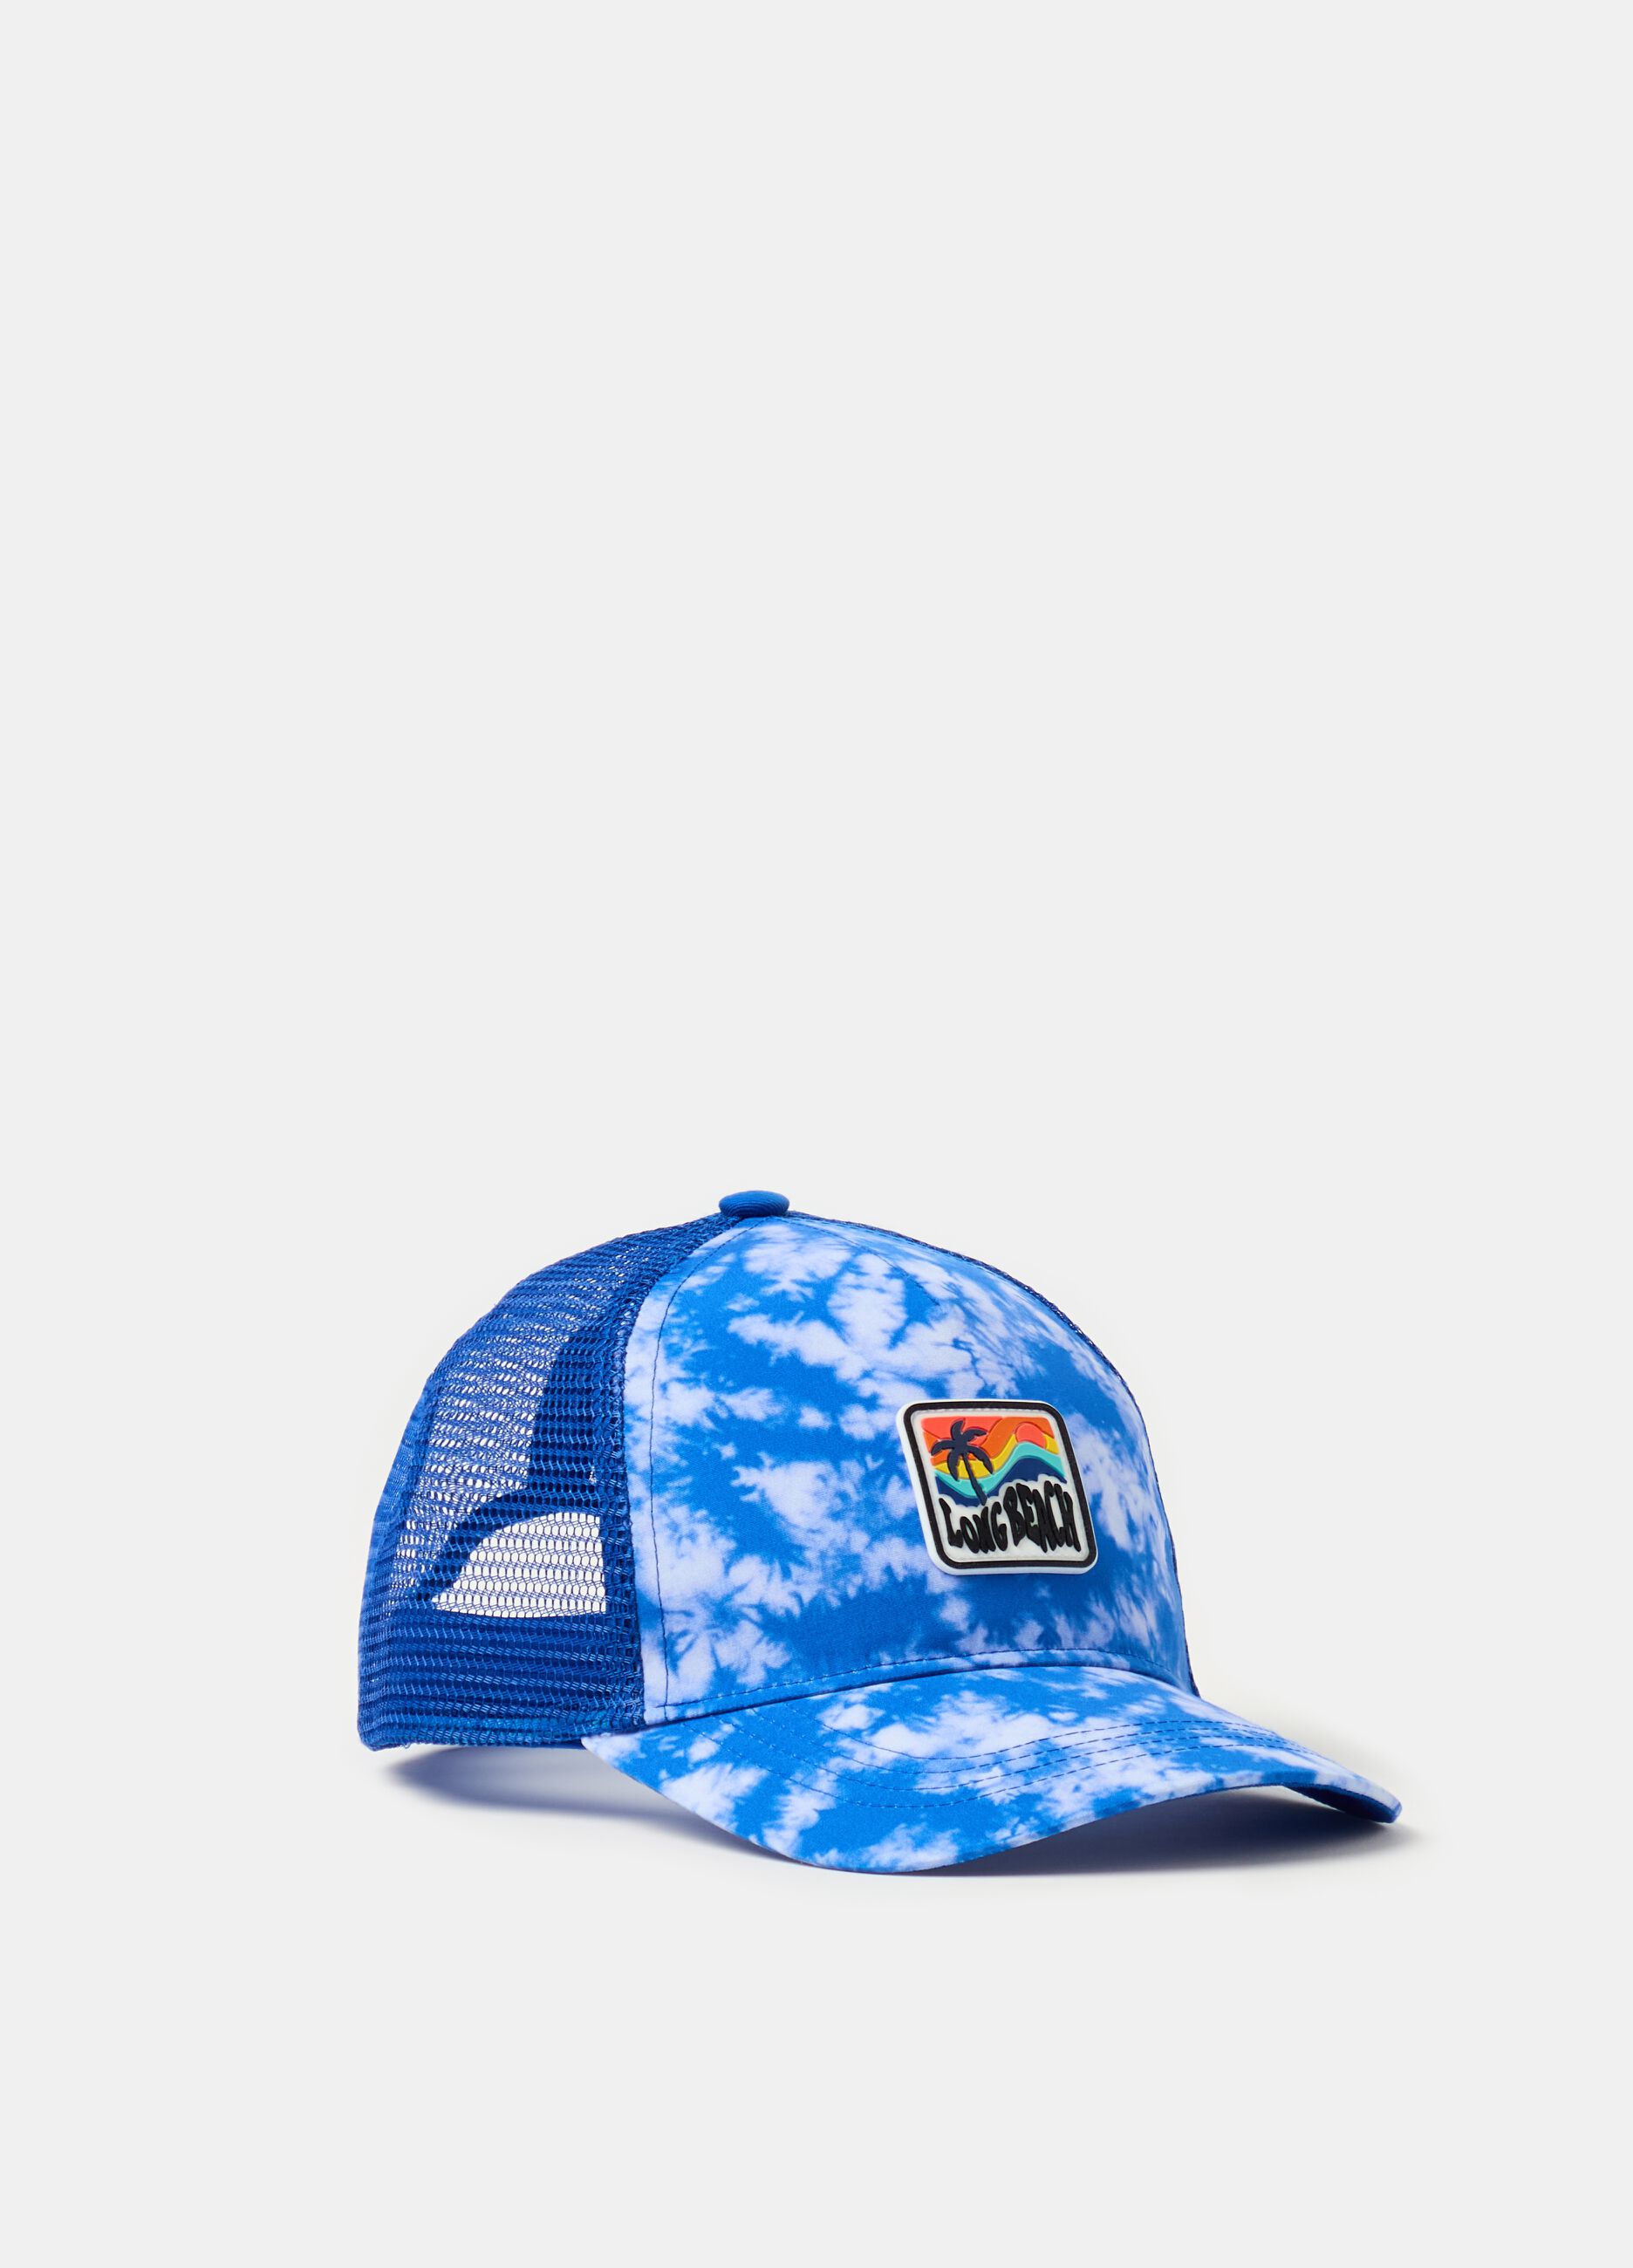 Baseball cap with tie-dye print